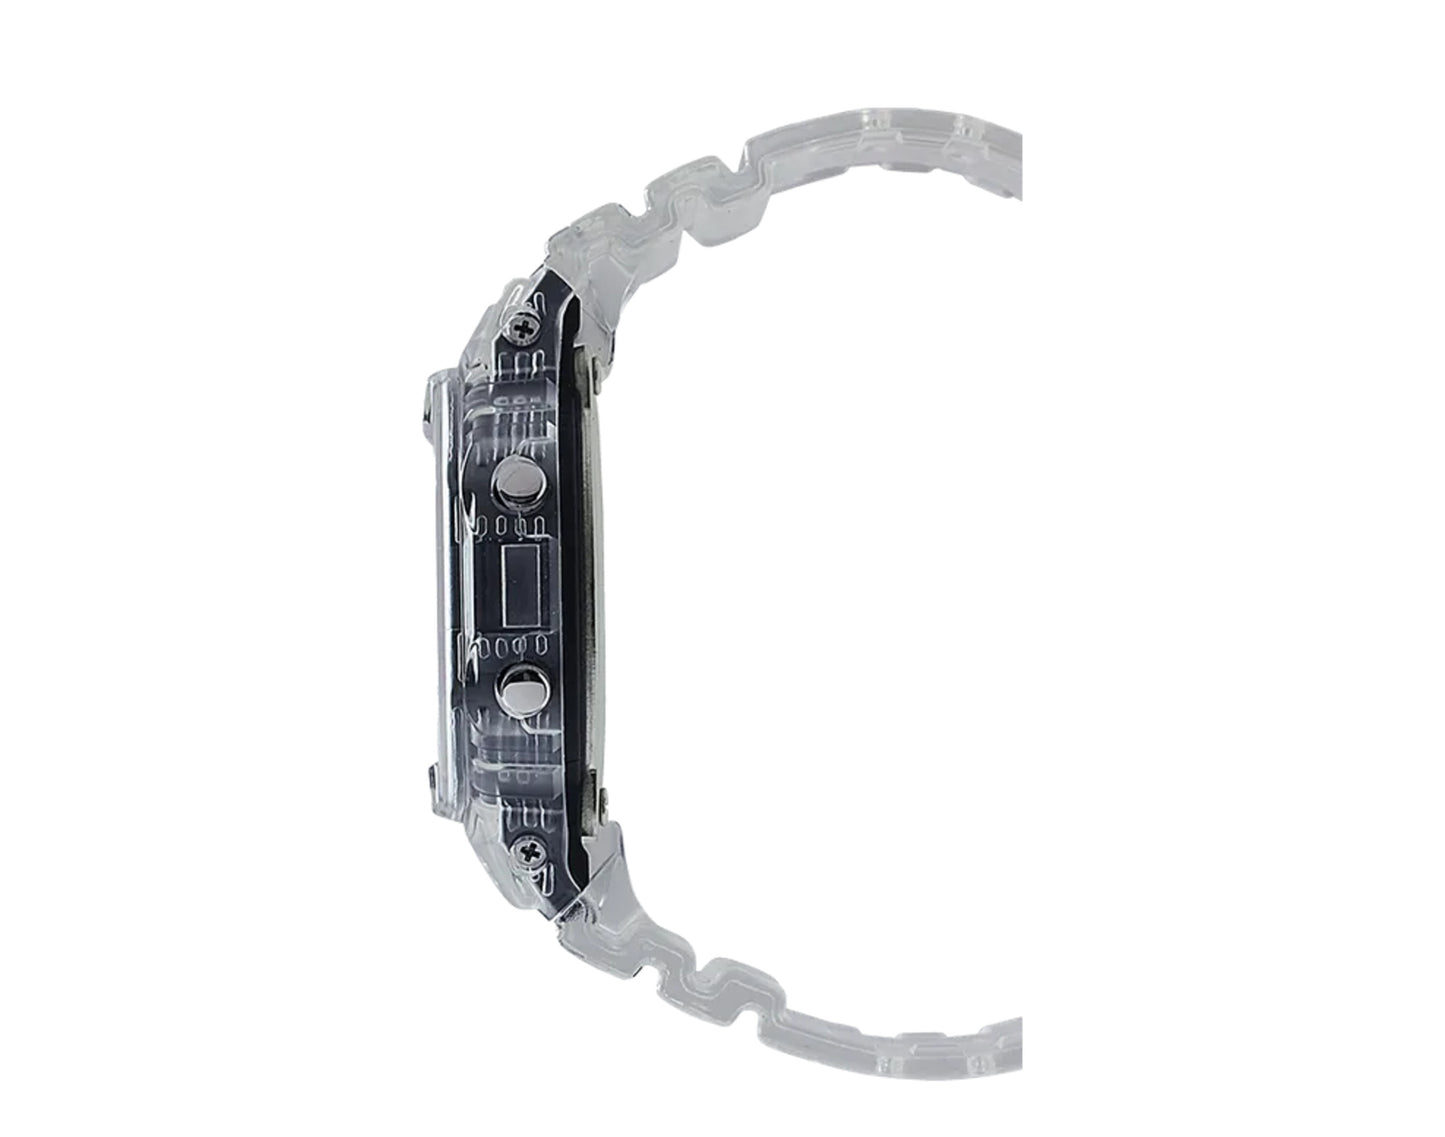 Casio G-Shock DW5600SKE Transparent Pack Digital Resin Watch